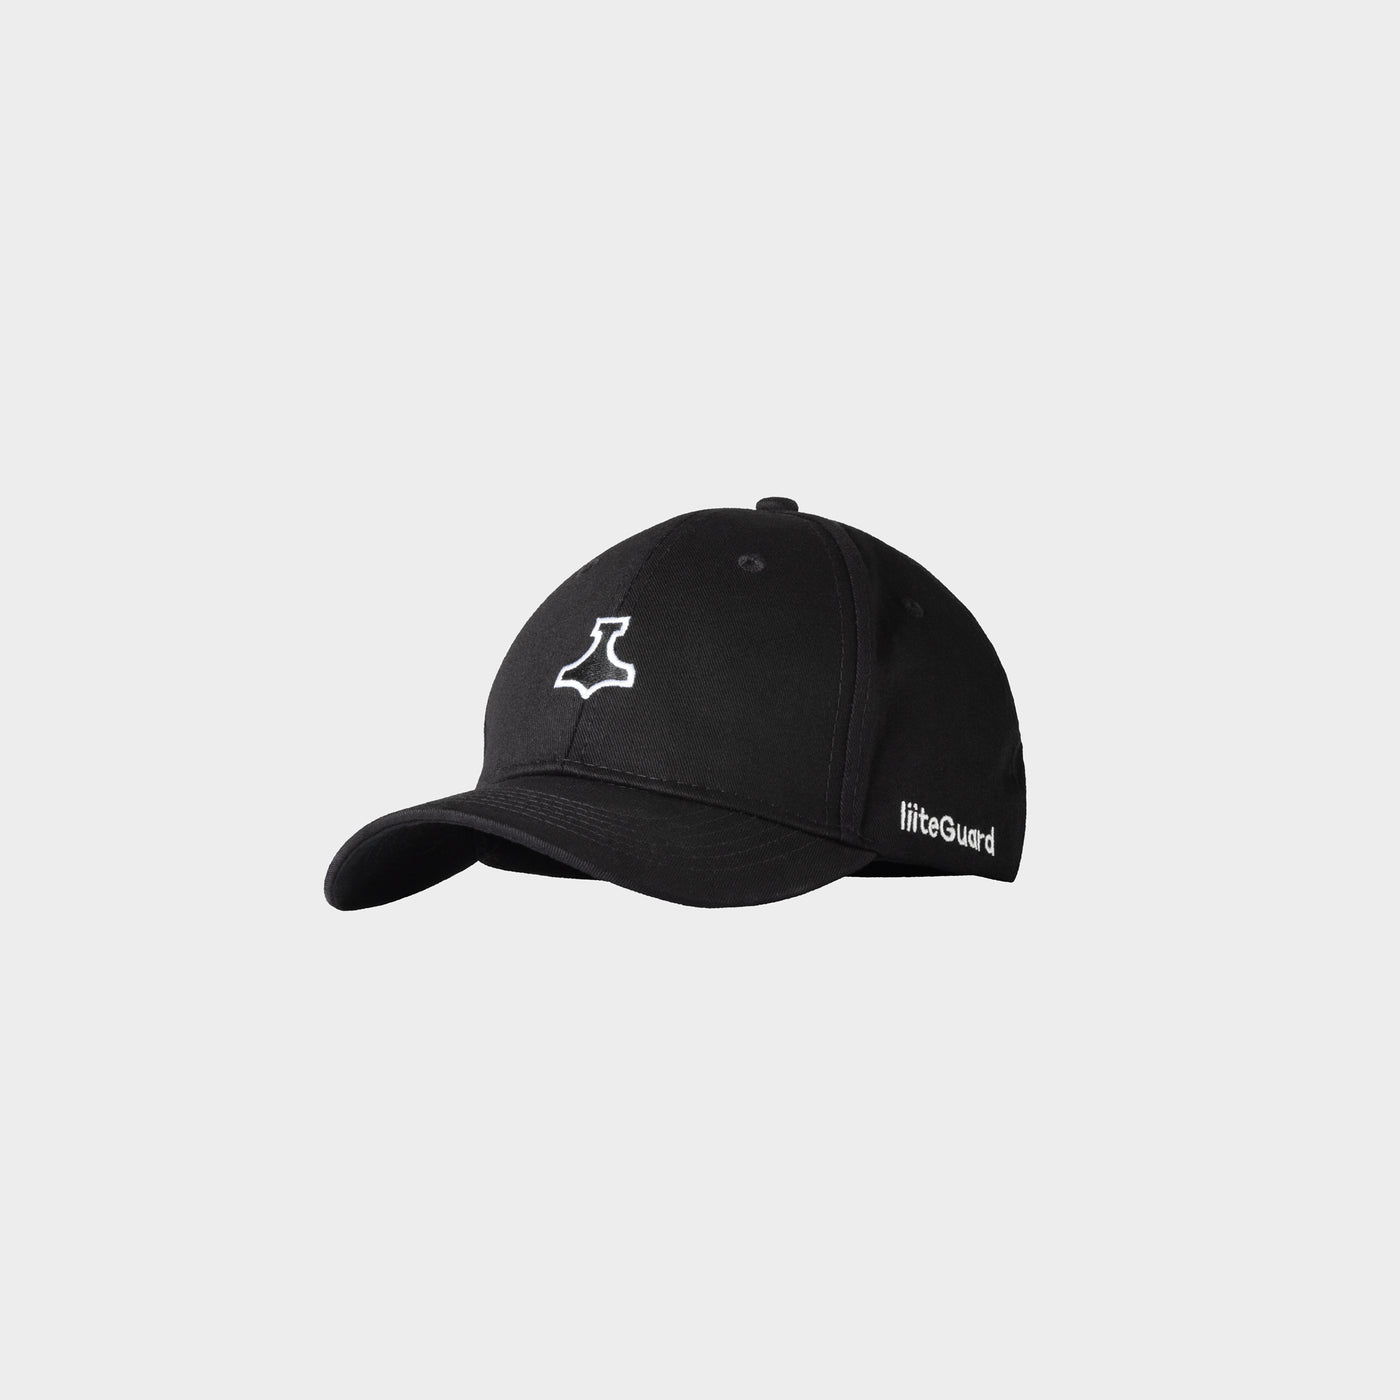 Liiteguard BASEBALL CAP Caps SORT